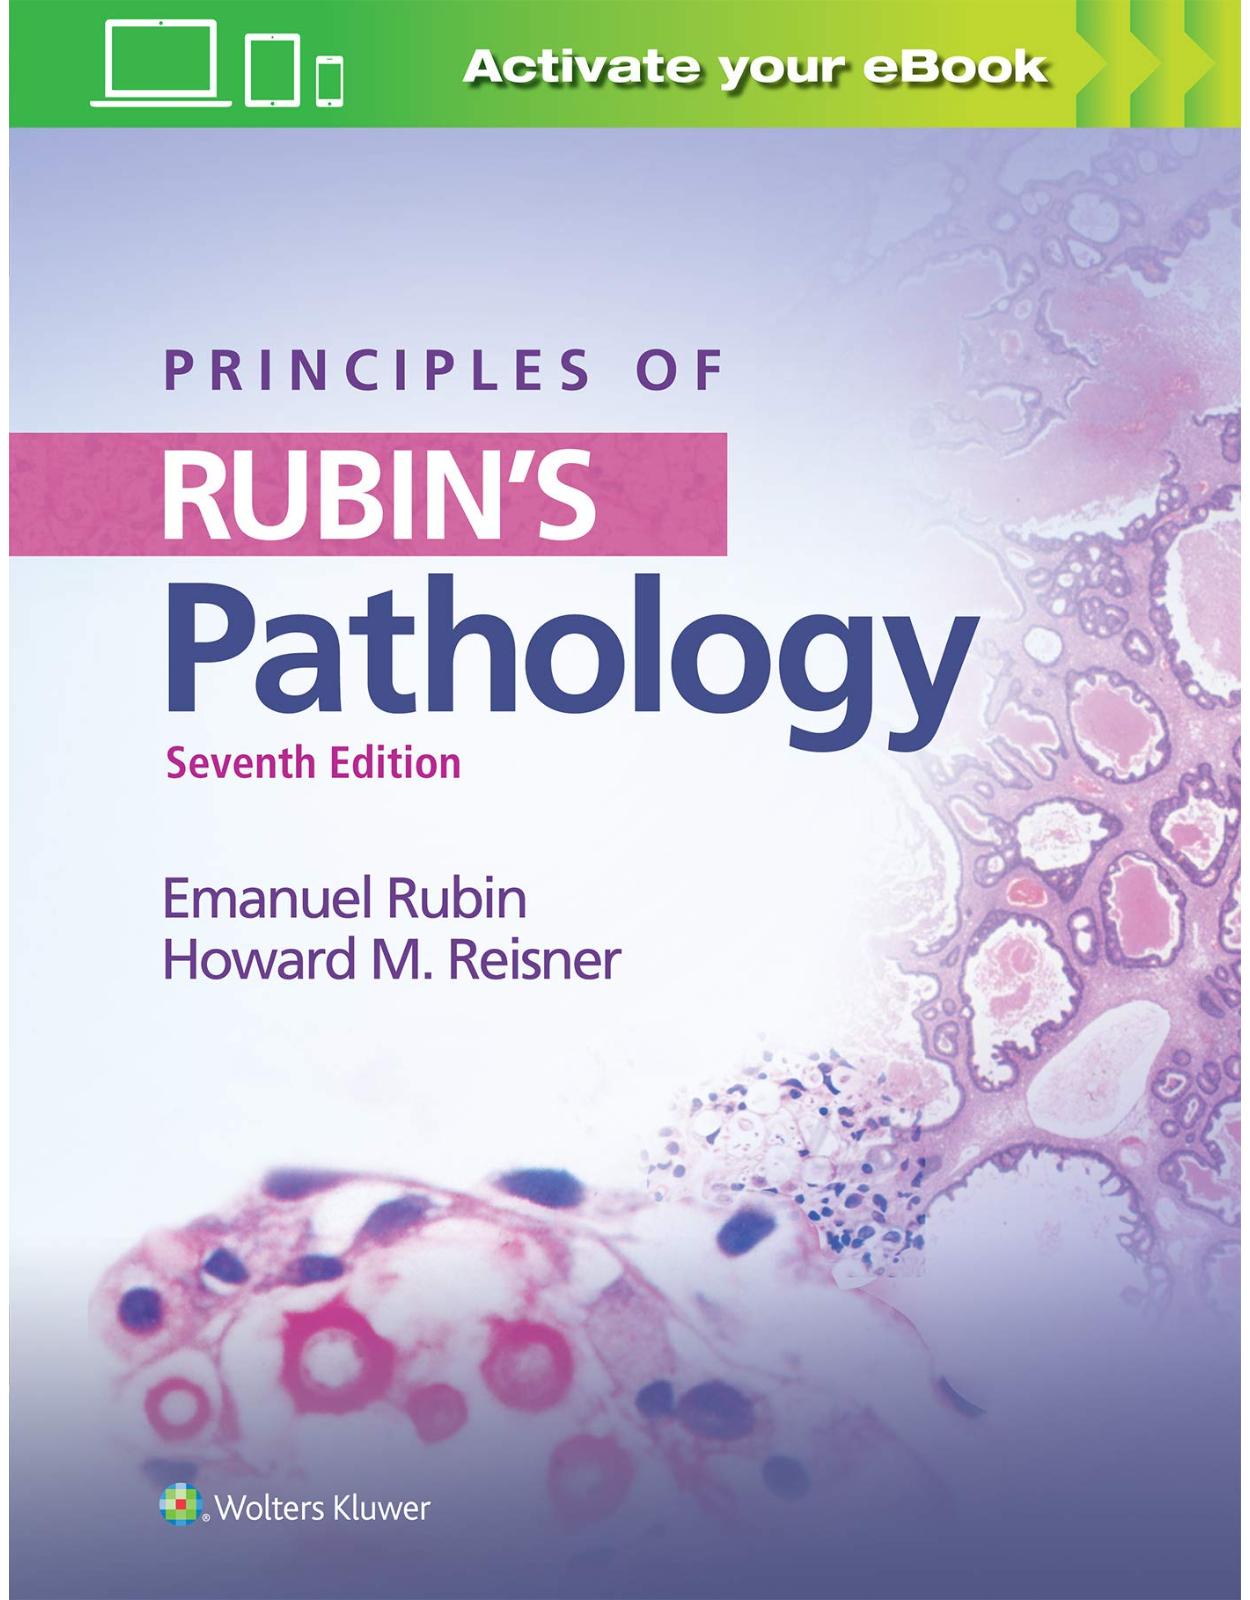 Principles of Rubin's Pathology